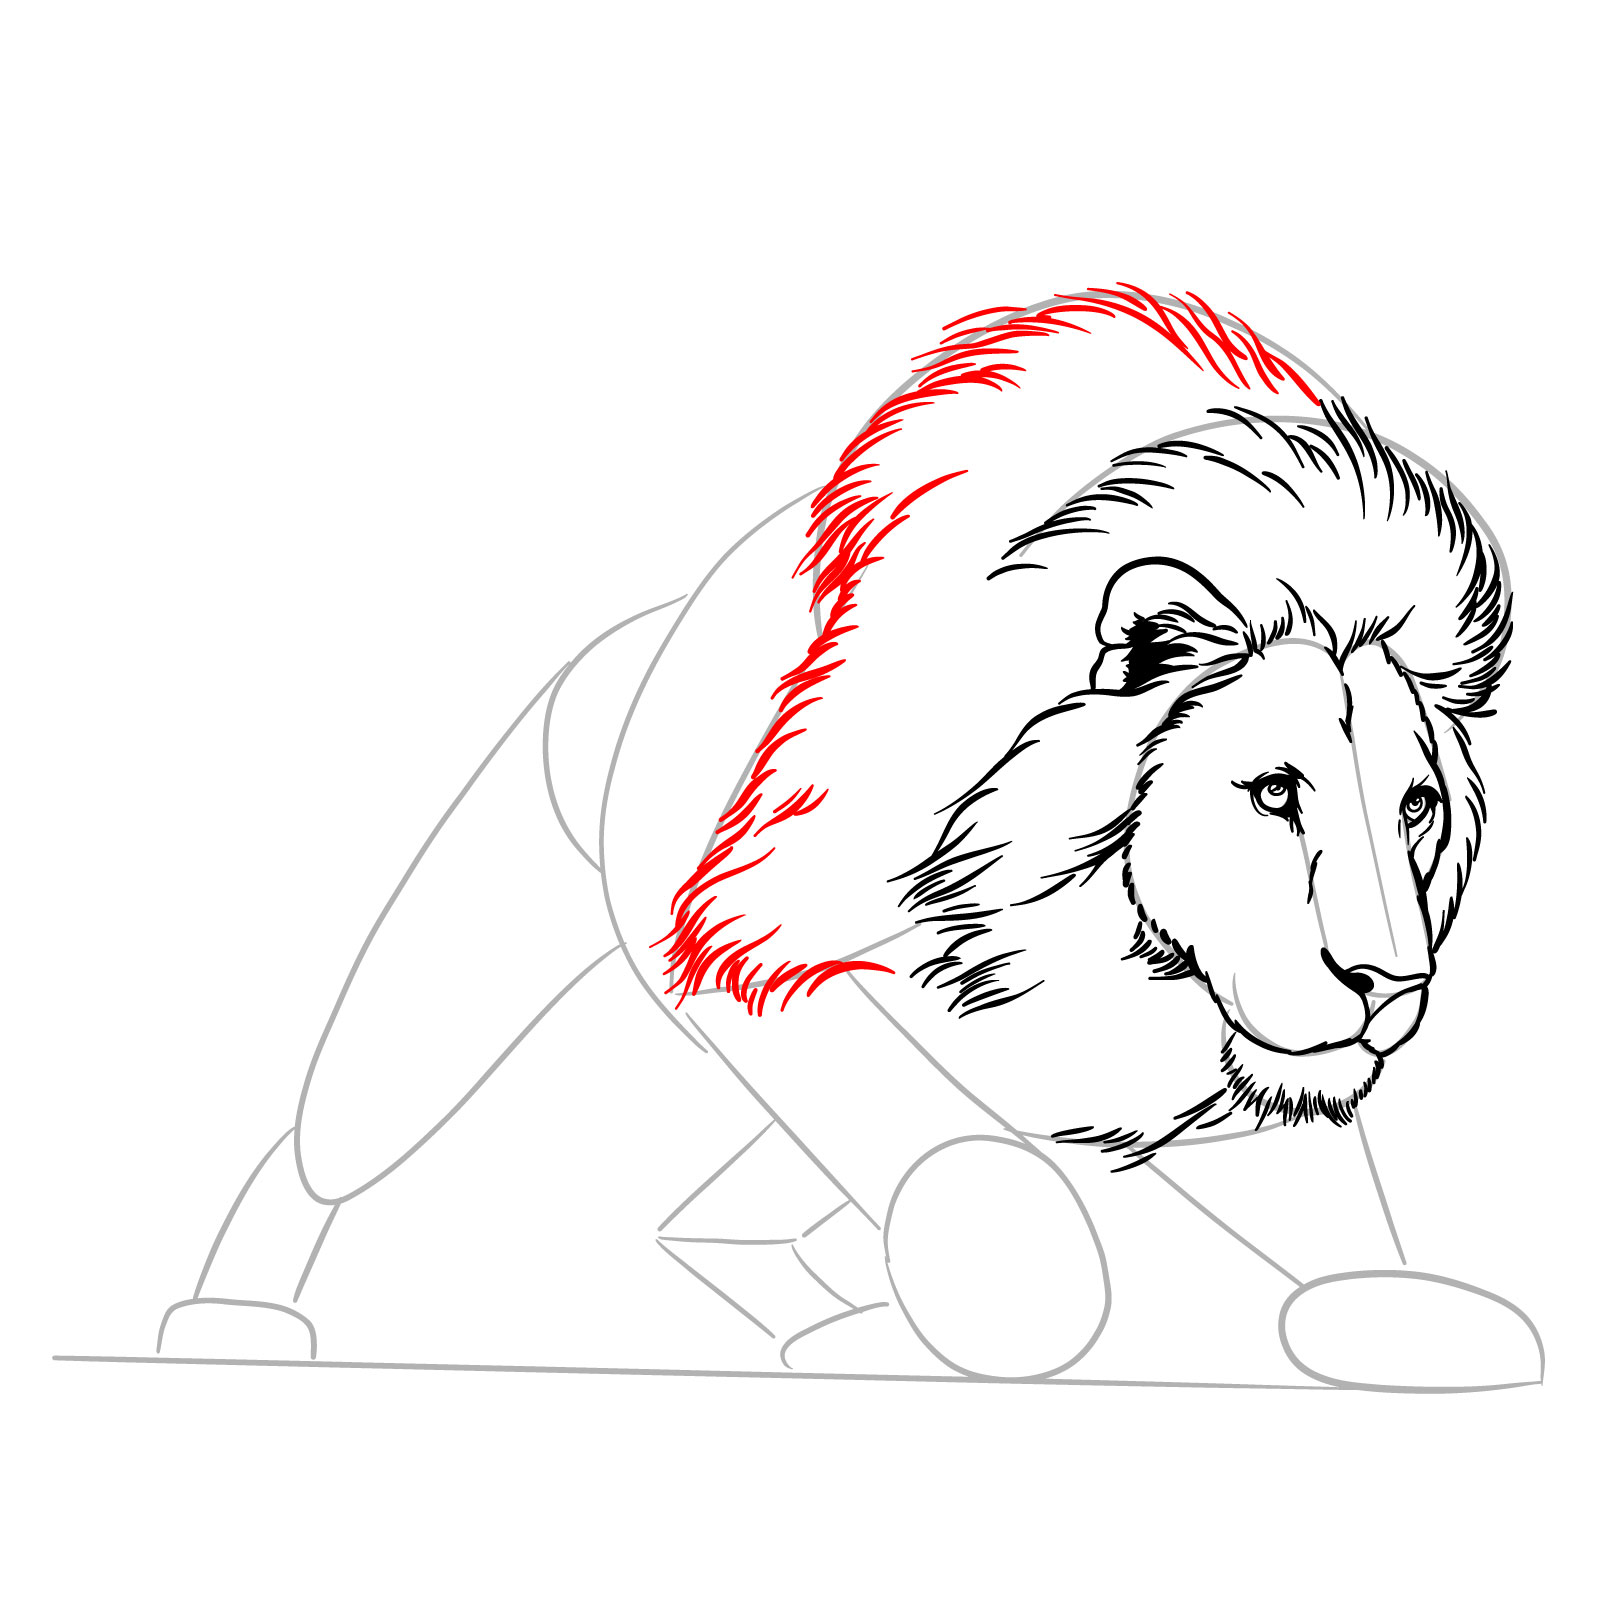 How to draw a hunting lion - Step 11: Main mane shape